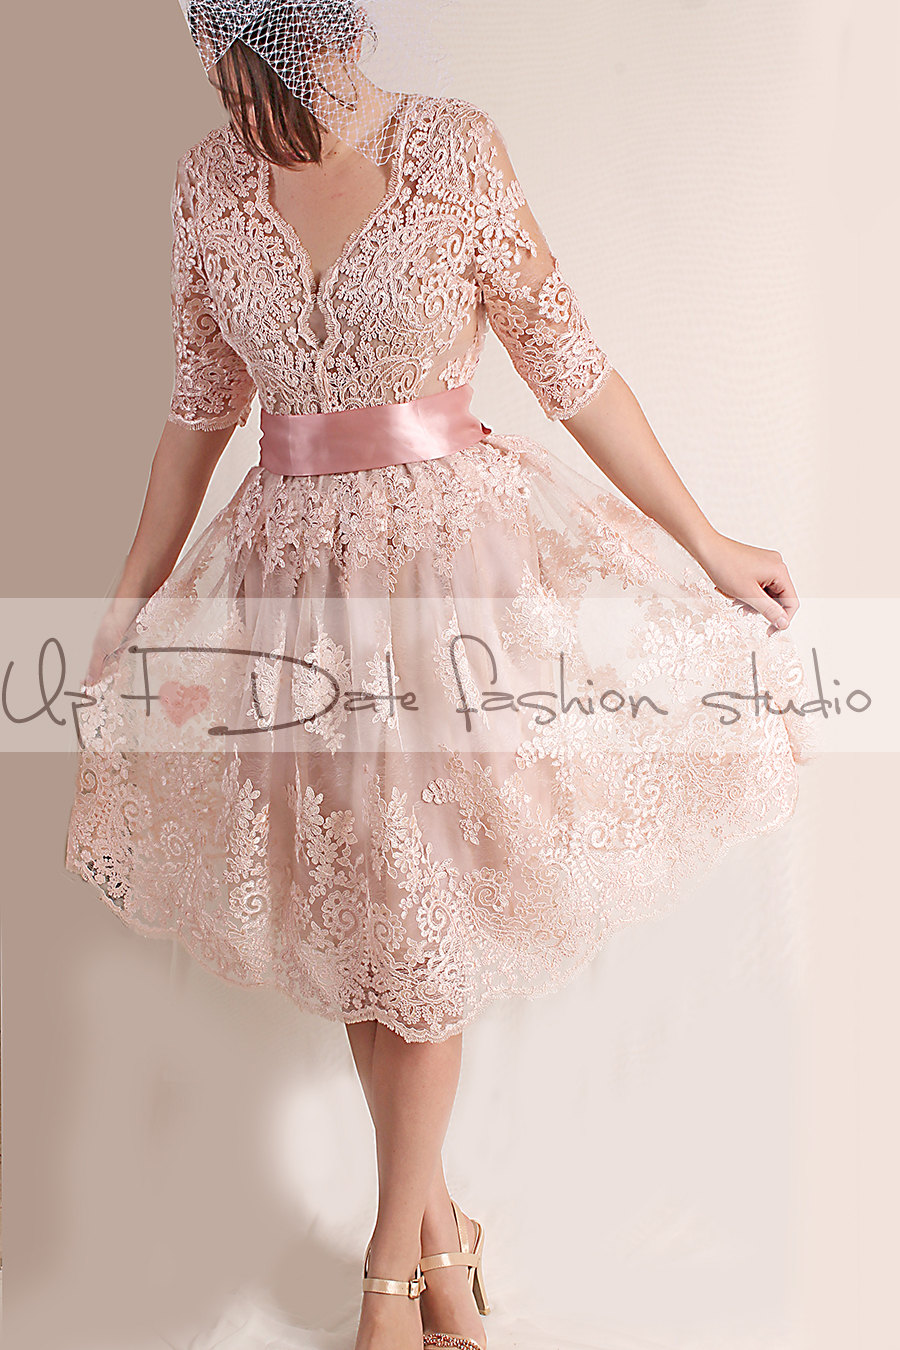 Party/Cocktail /evening/knee length /alencon lace dress/open back/ blush pink dress